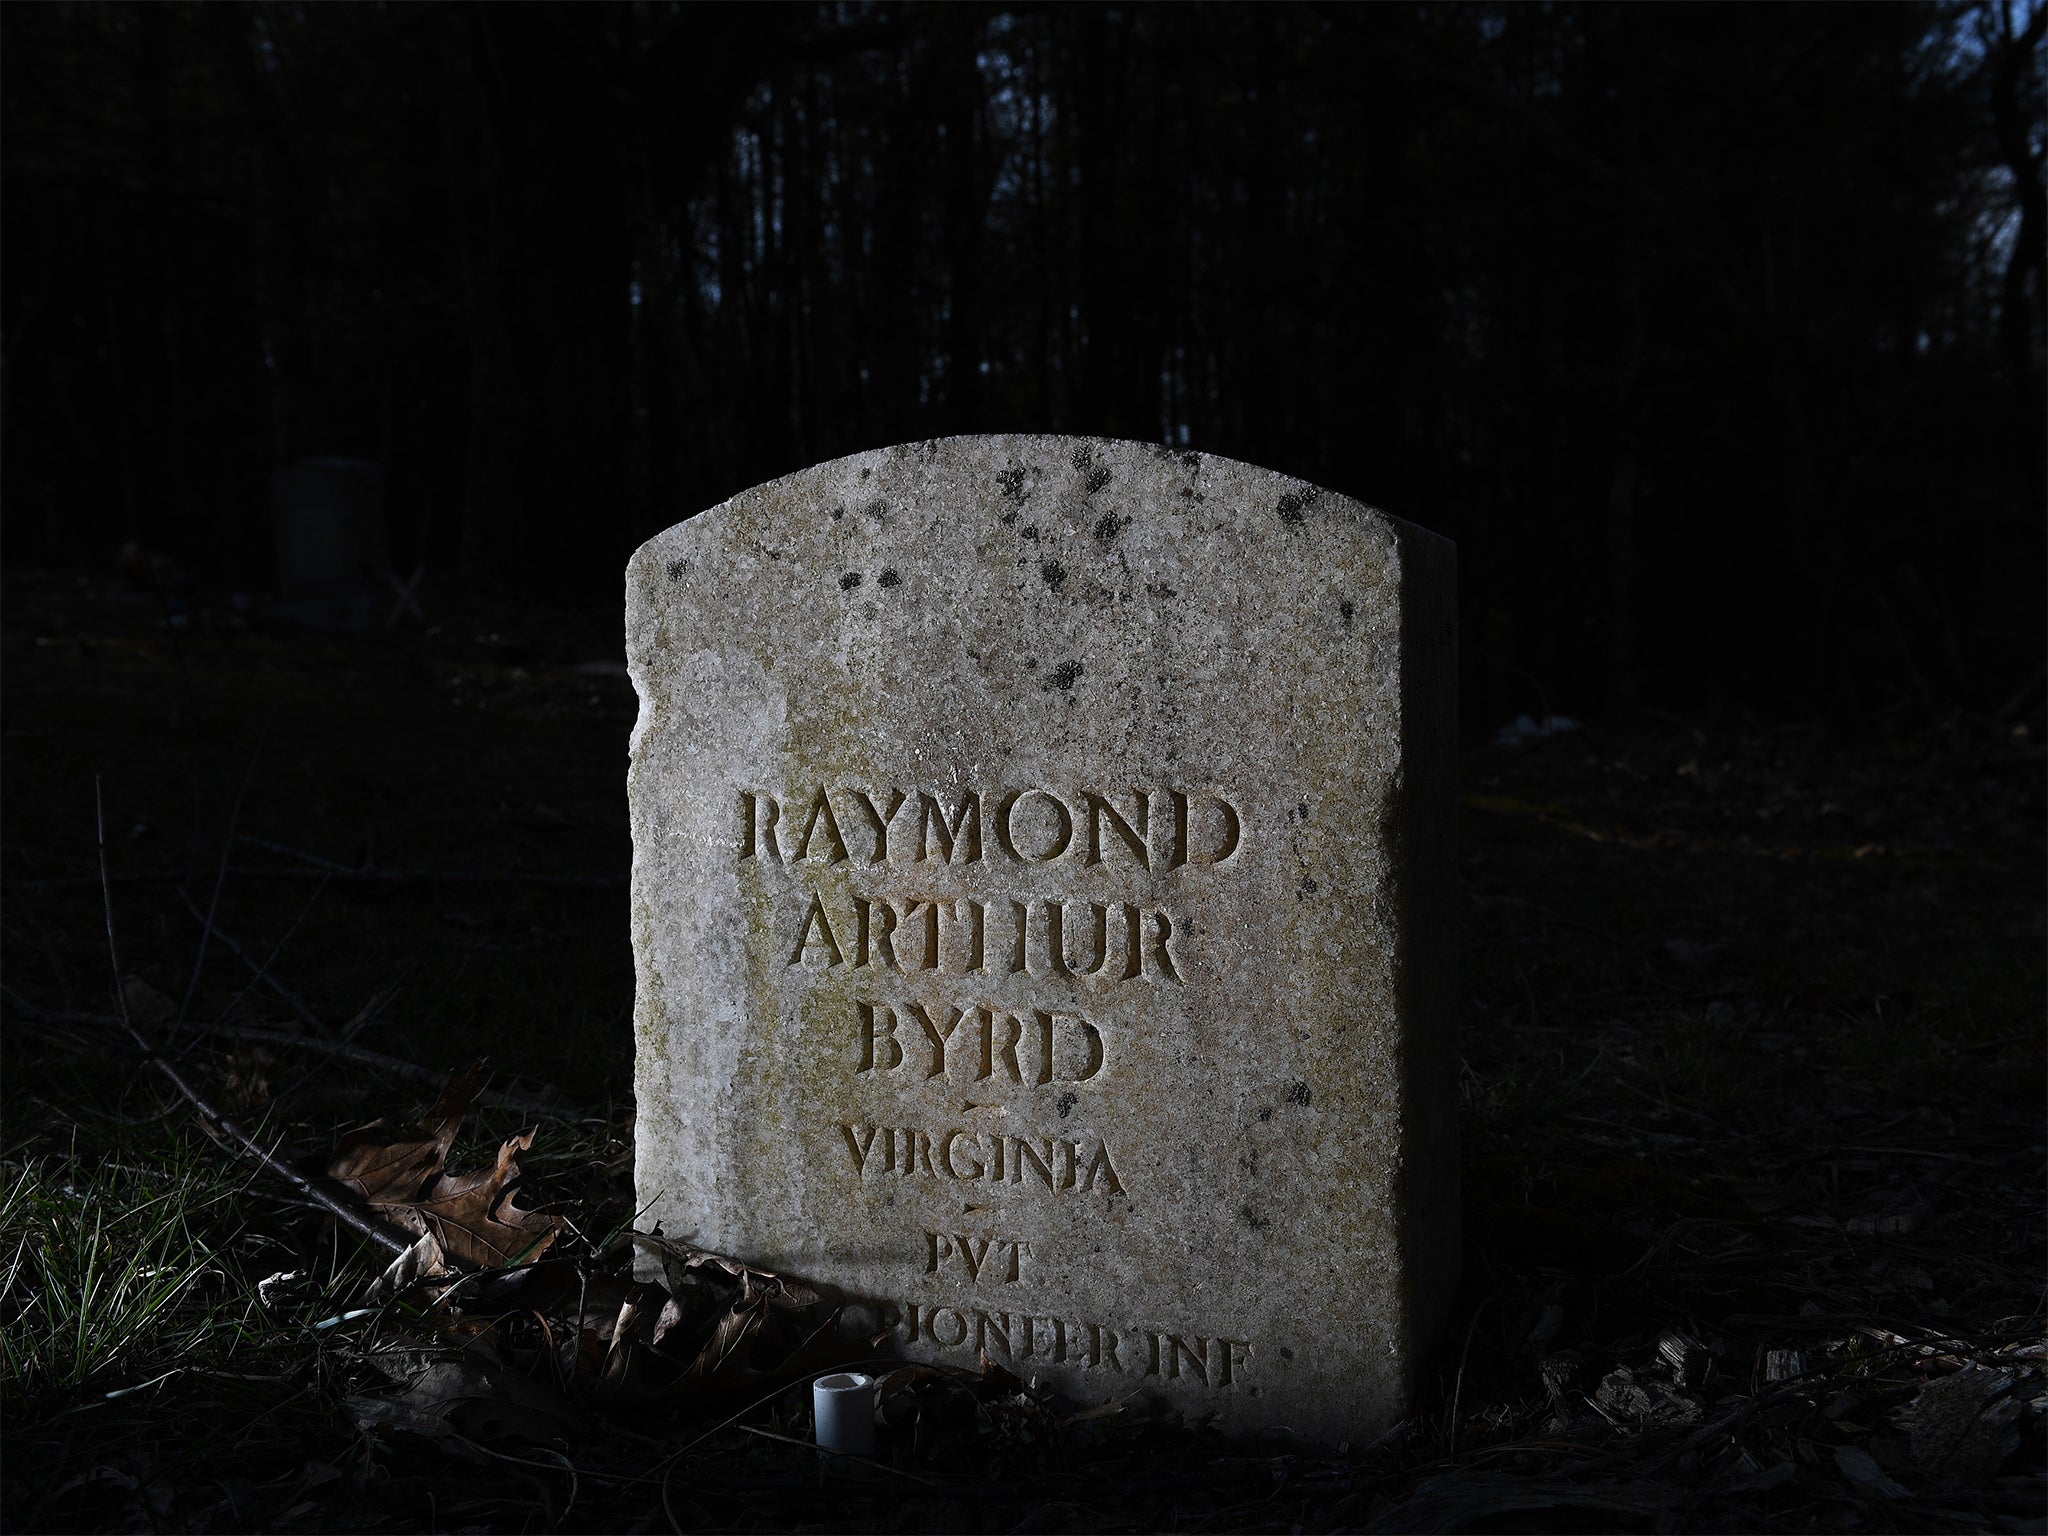 The headstone of Raymond Byrd, Murphyville cemetery, Wythe County, Virginia (Matt McClain for Washington Post)